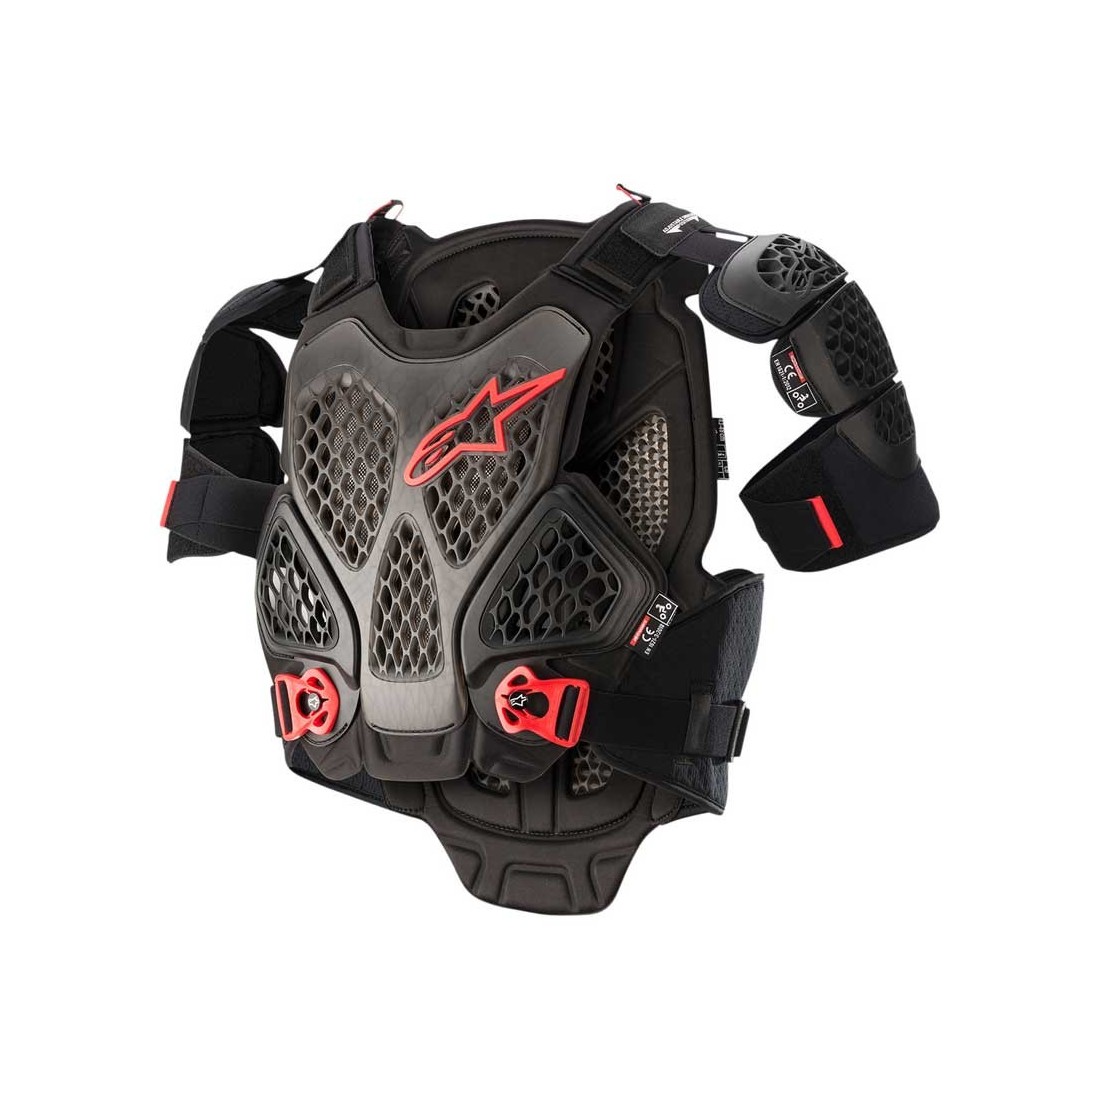 Thor Guardian Brustpanzer Rückenschutz 2019 MX Motocross Enduro DH MTB 